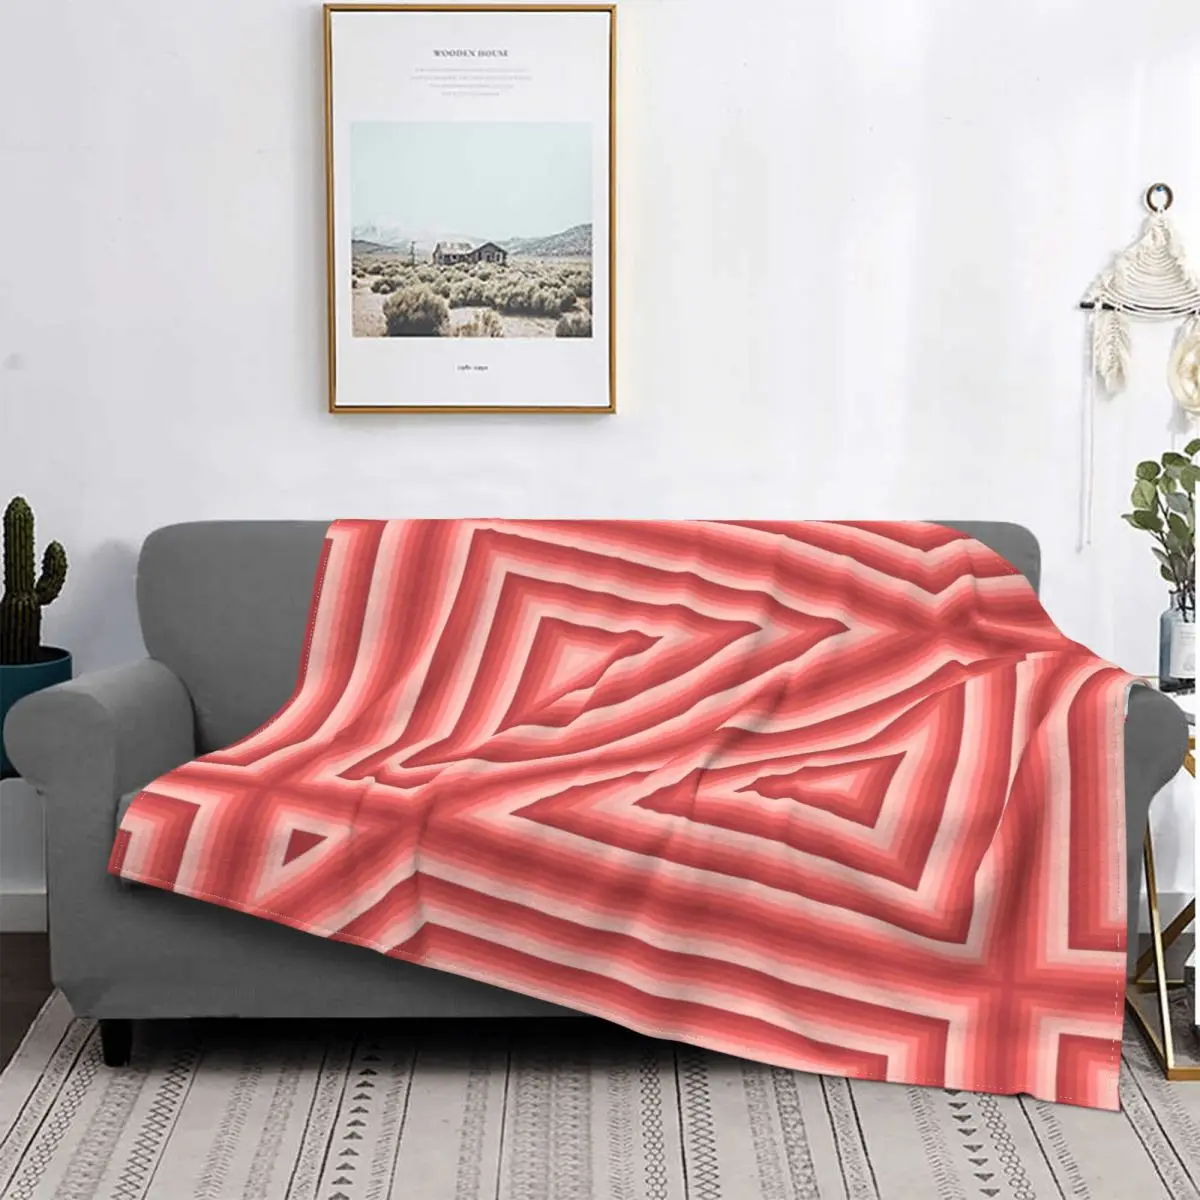 

Manta inclinada roja, para cama colcha, manta a cuadros, cubierta de playa, manta doble, colchas para camas